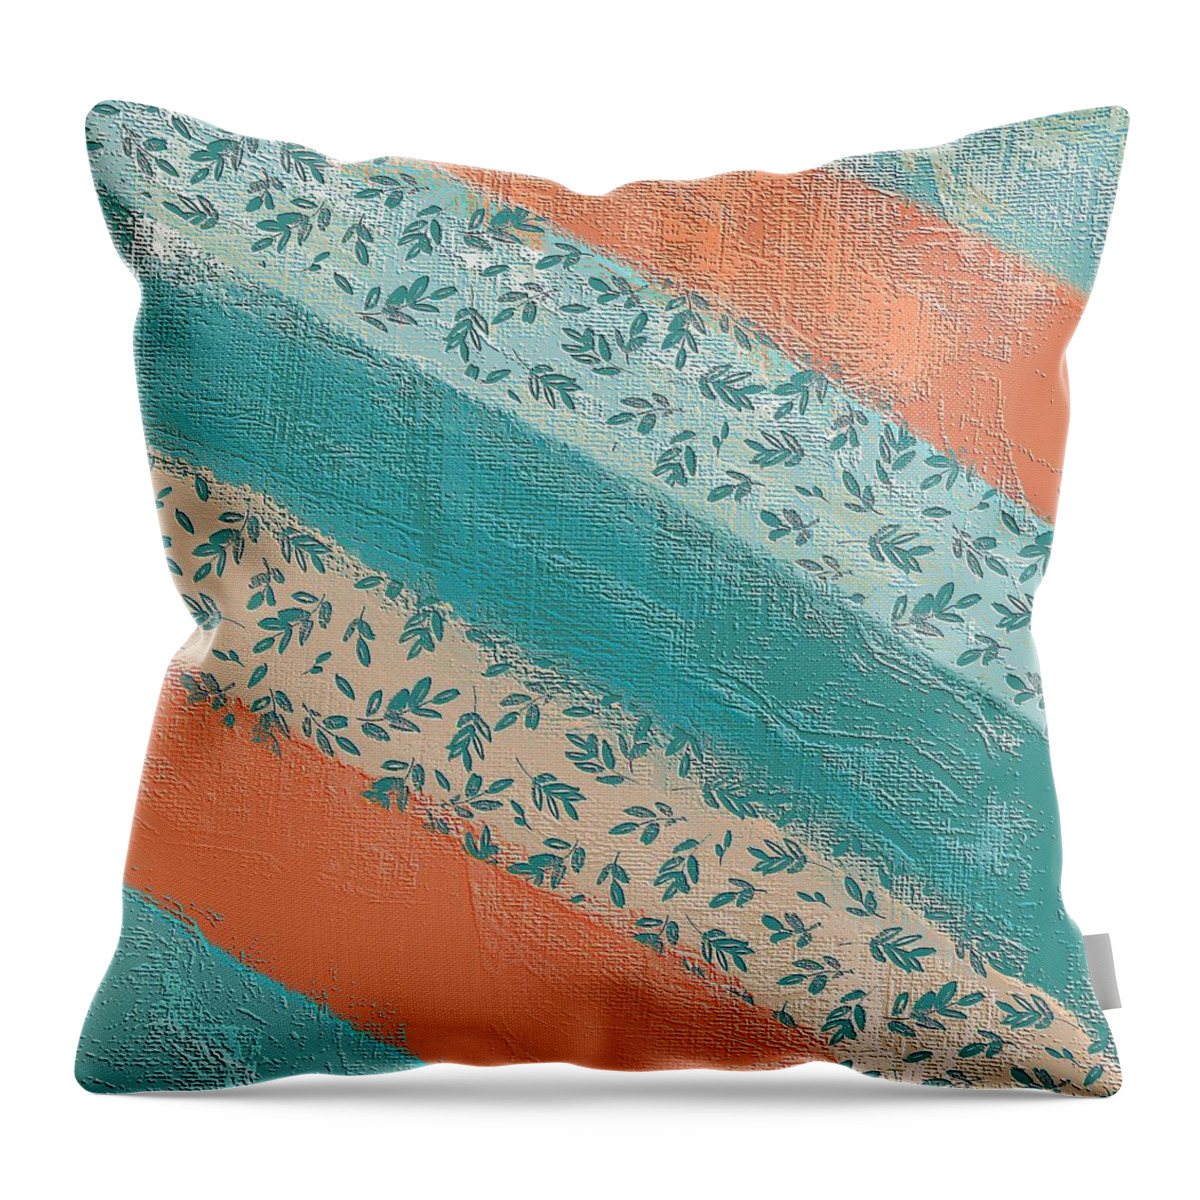 Pattern Throw Pillow featuring the digital art Teal and Peach Diagonal by Bonnie Bruno